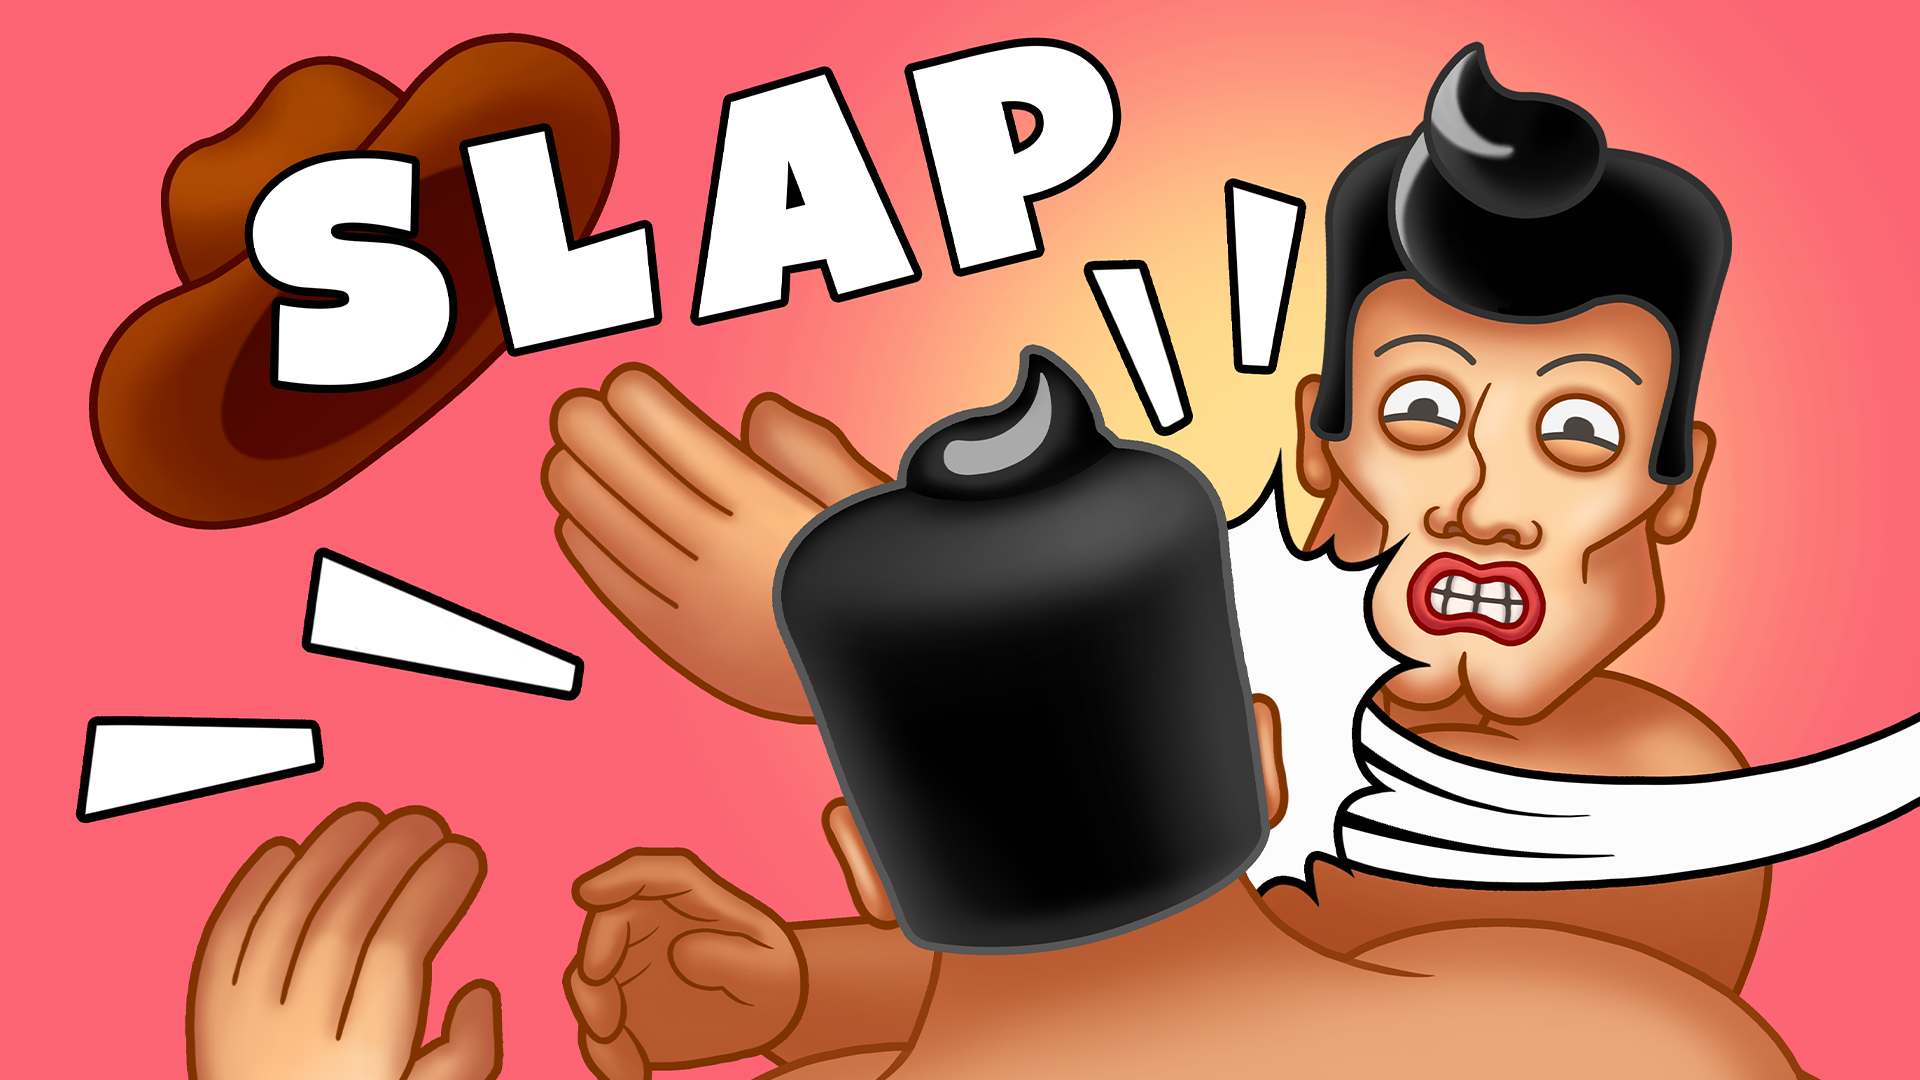 Slap Fight Arena Game Image